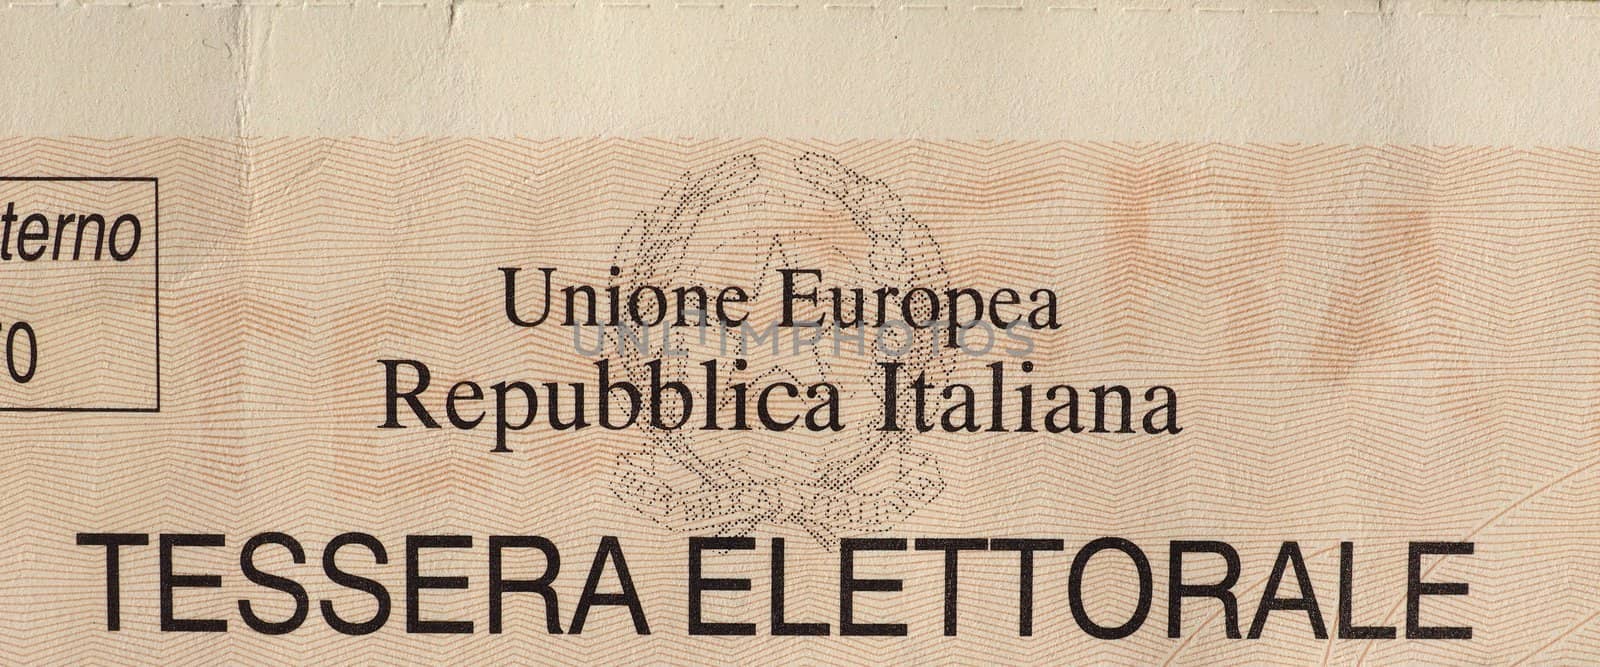 Italian electoral card by claudiodivizia